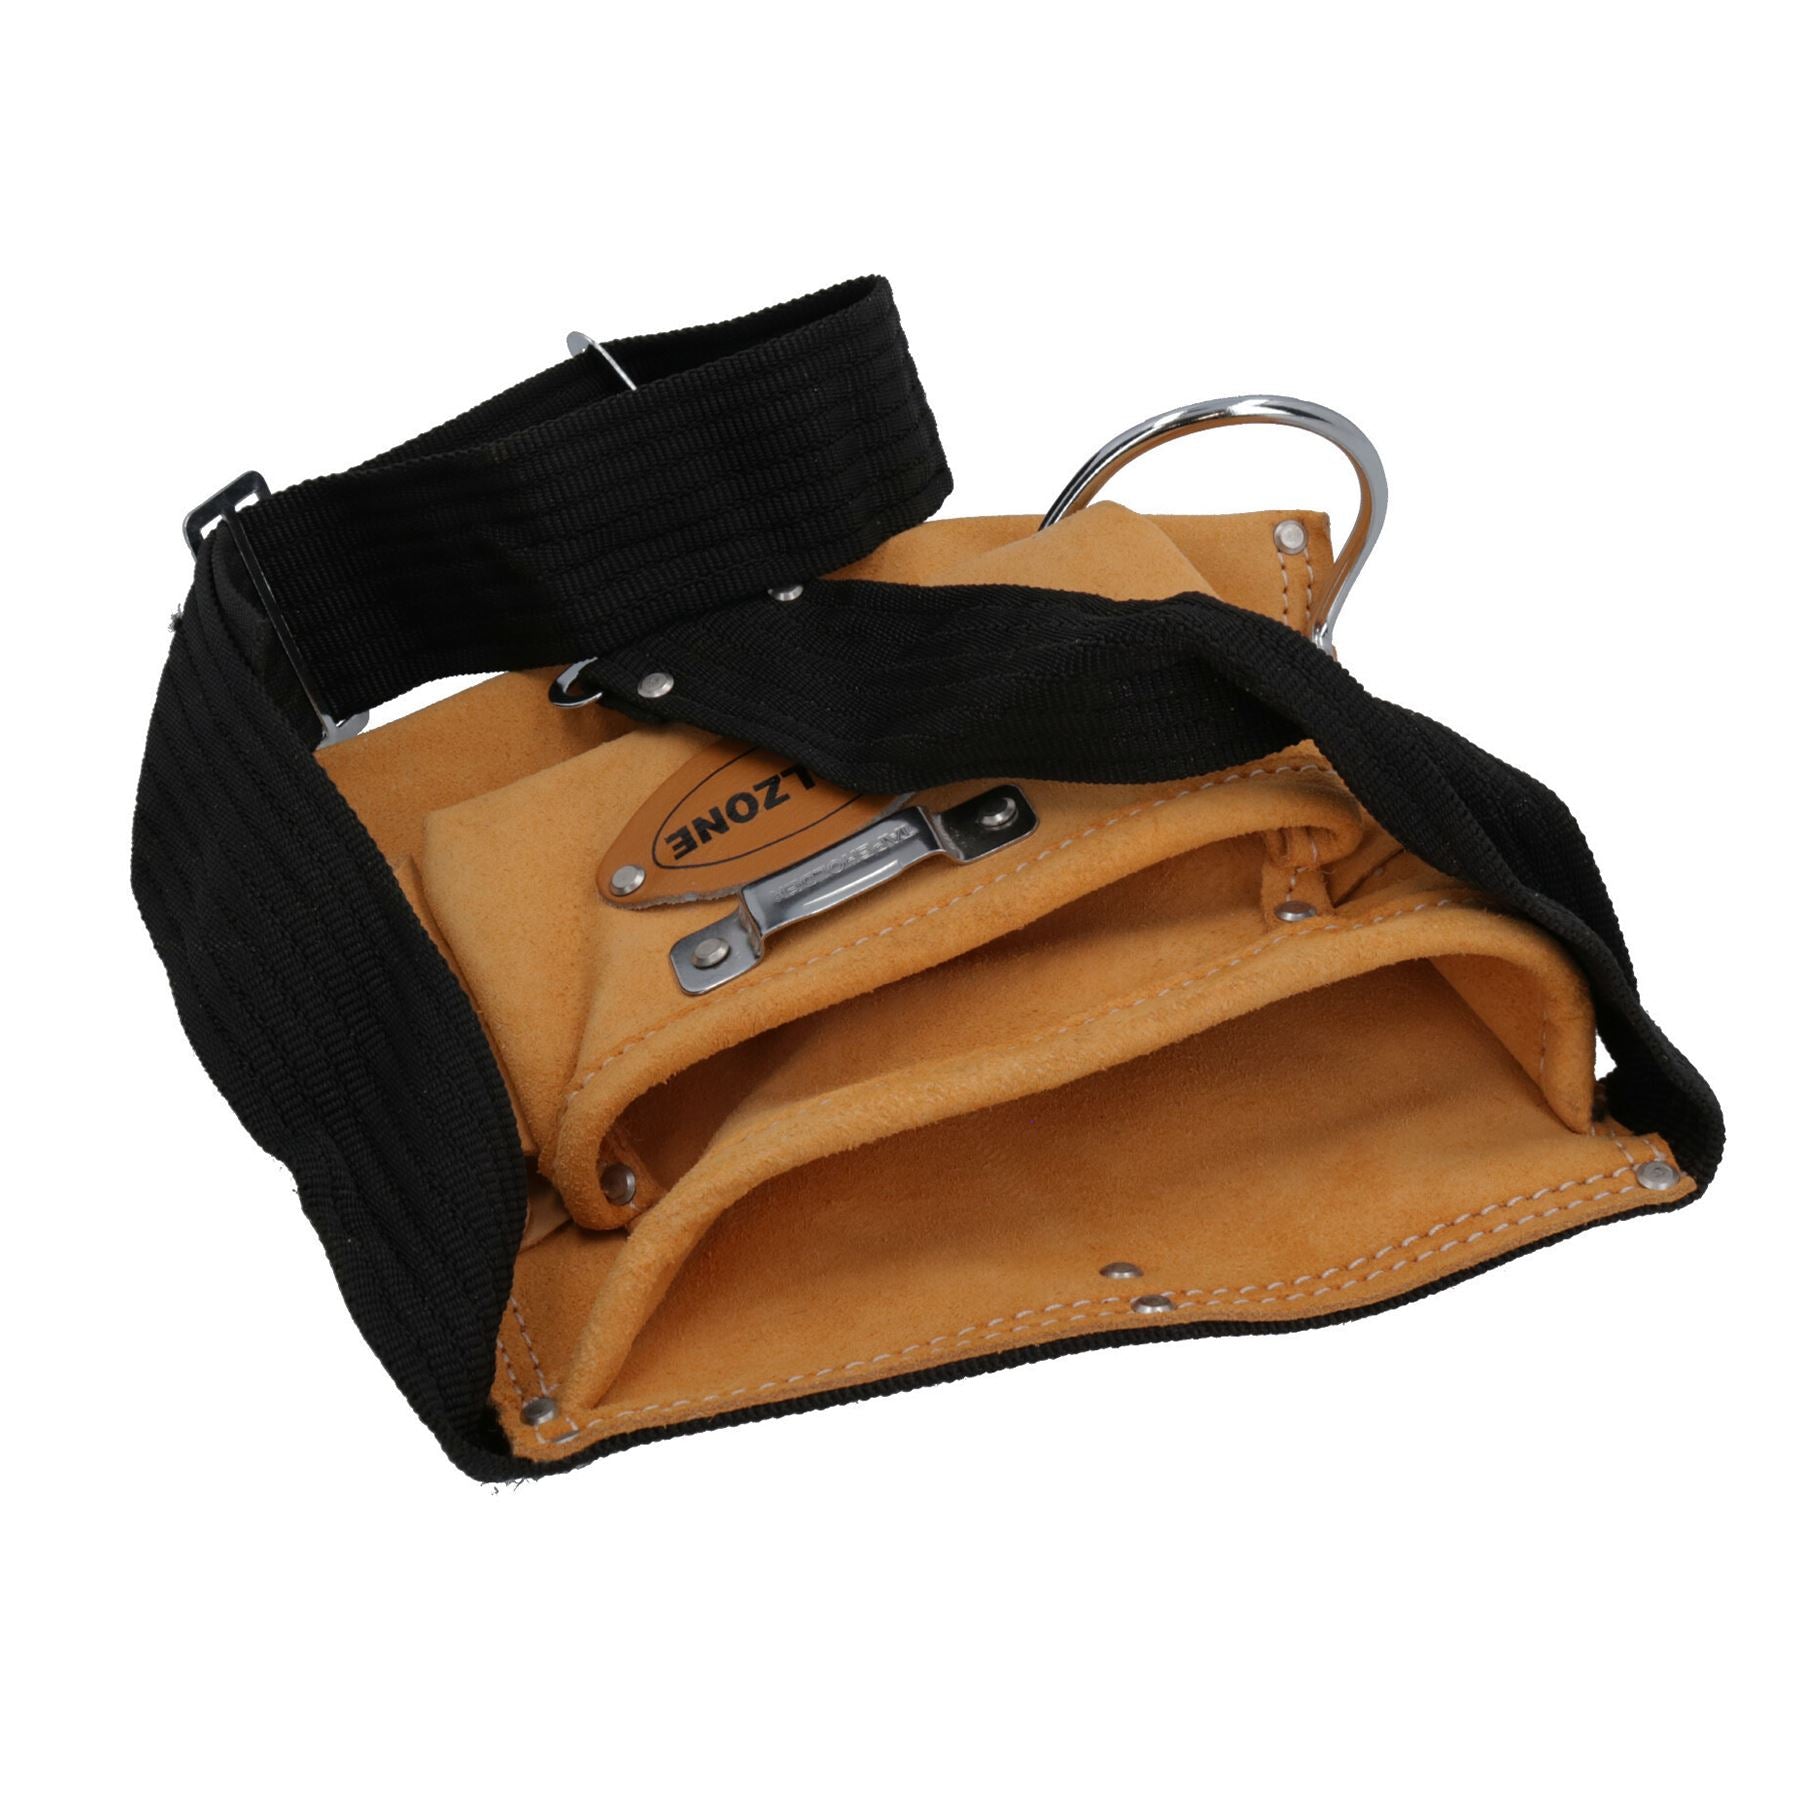 Leather Toll Belt Roll Pouch Holder with Adjustable Web Belt Buckle Clip 5 Pocket